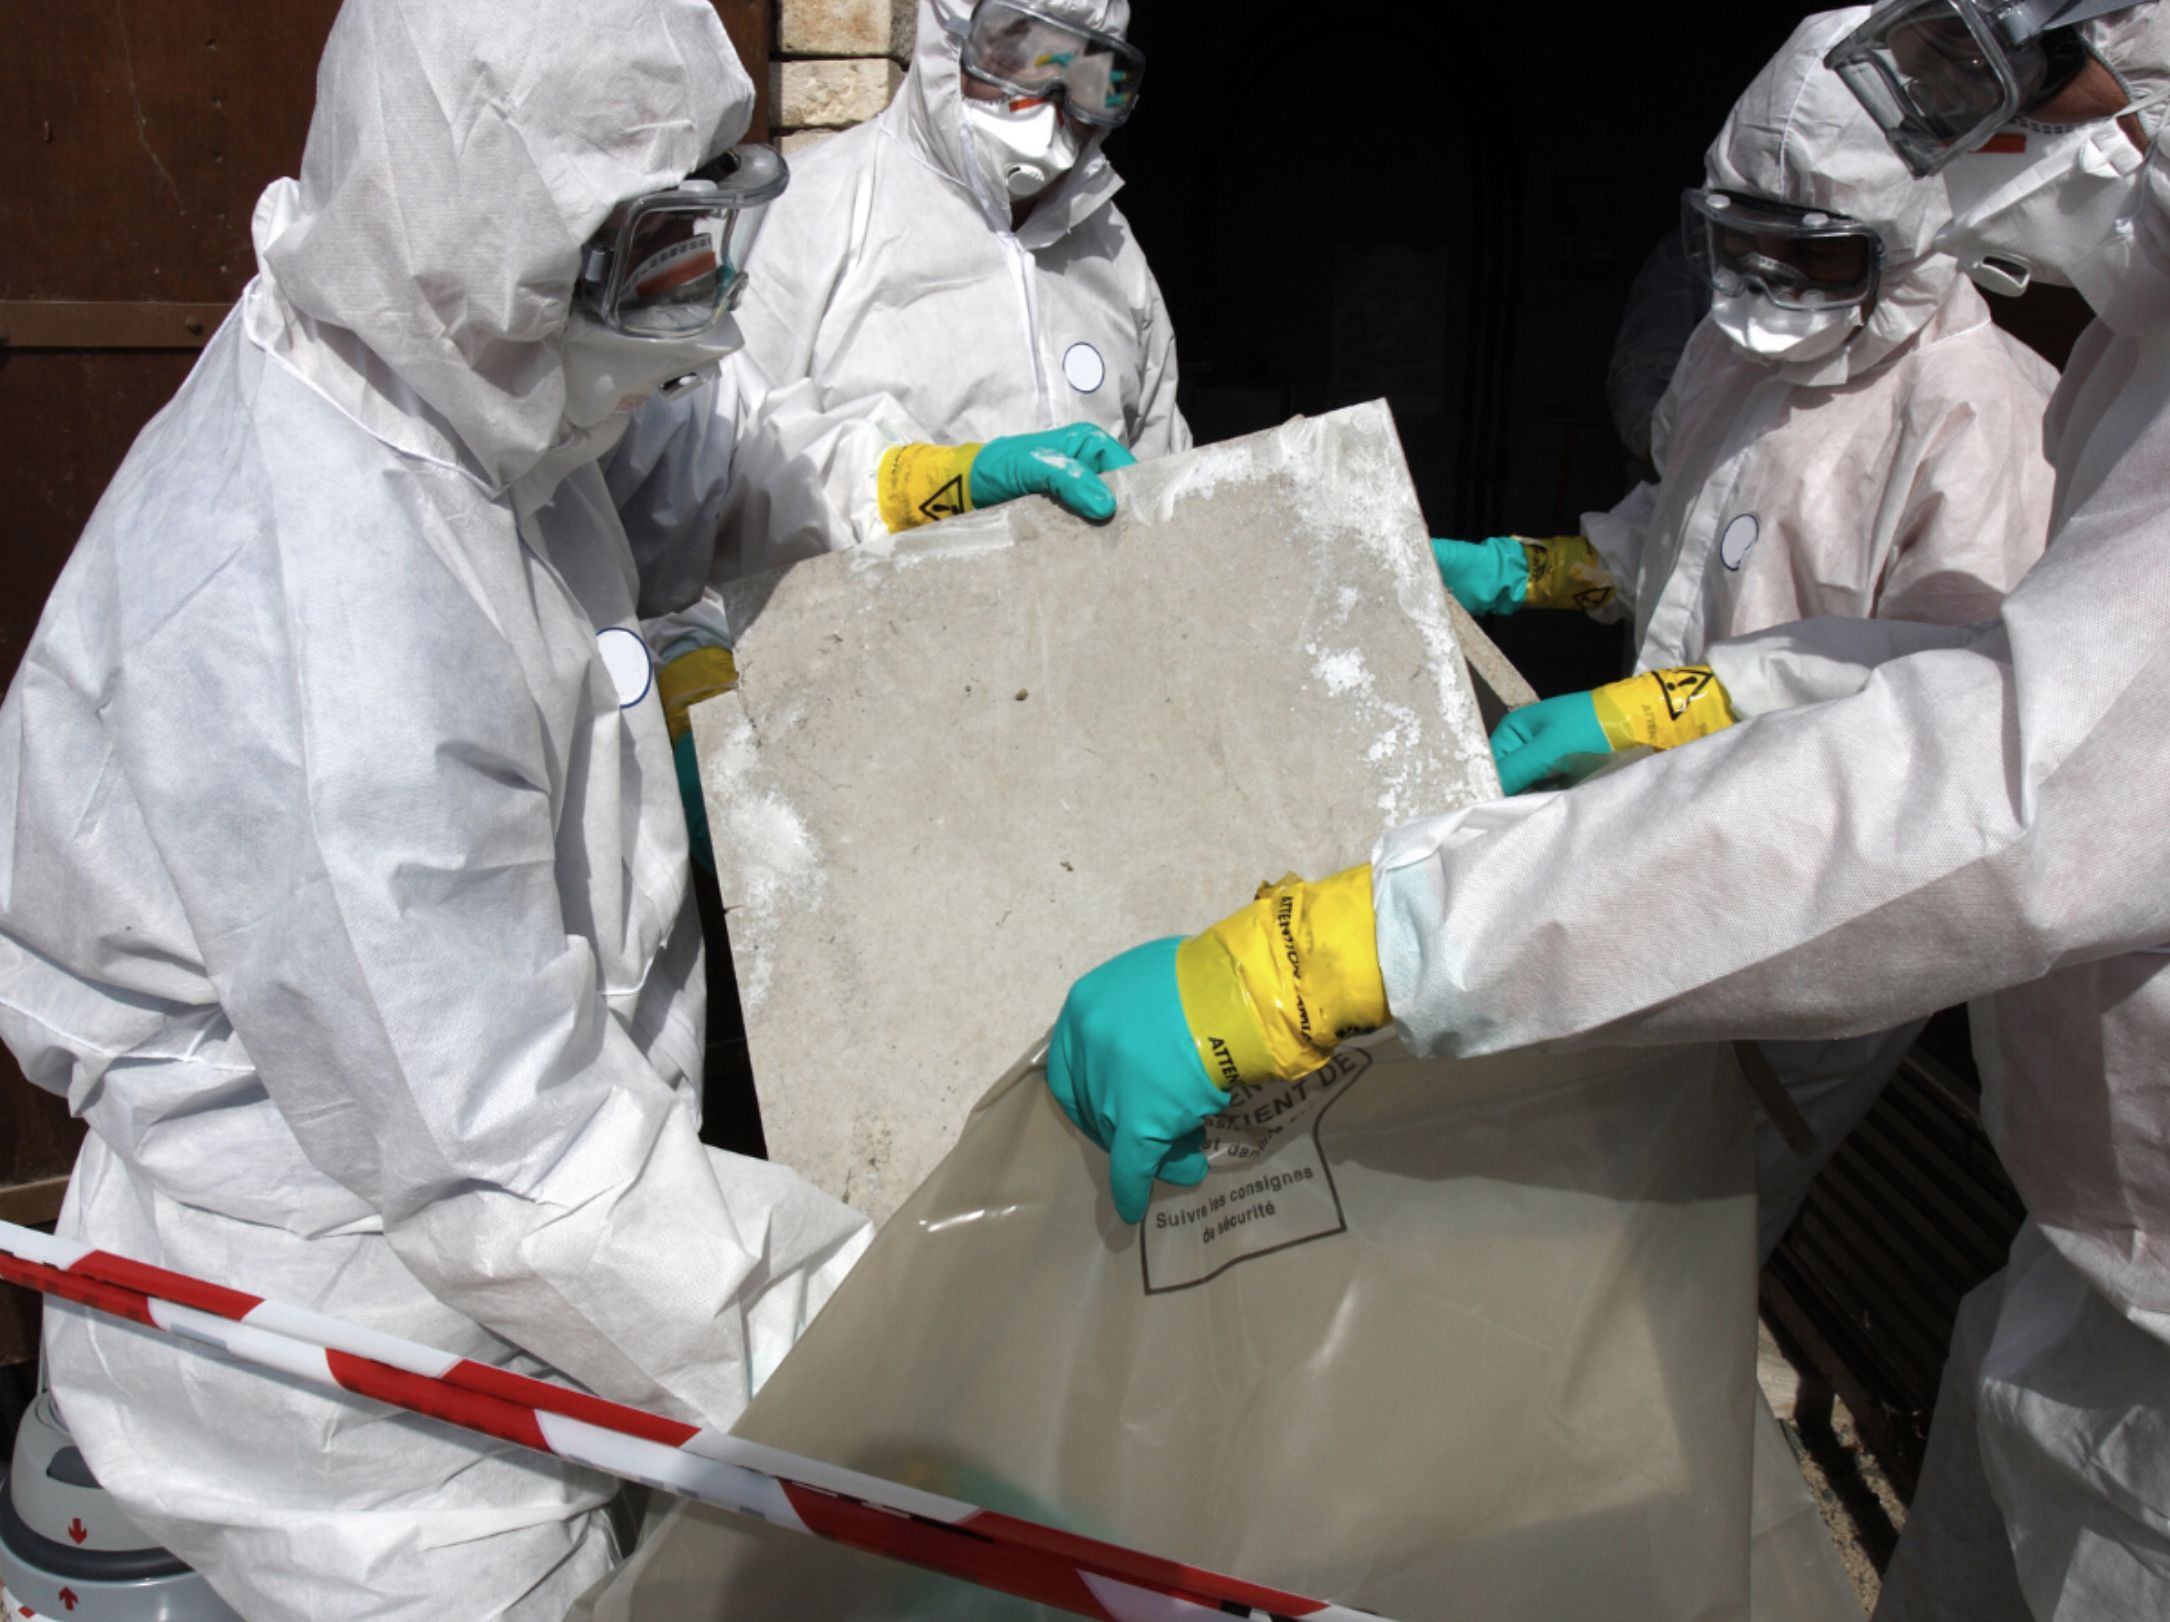 Asbestos Removal Team